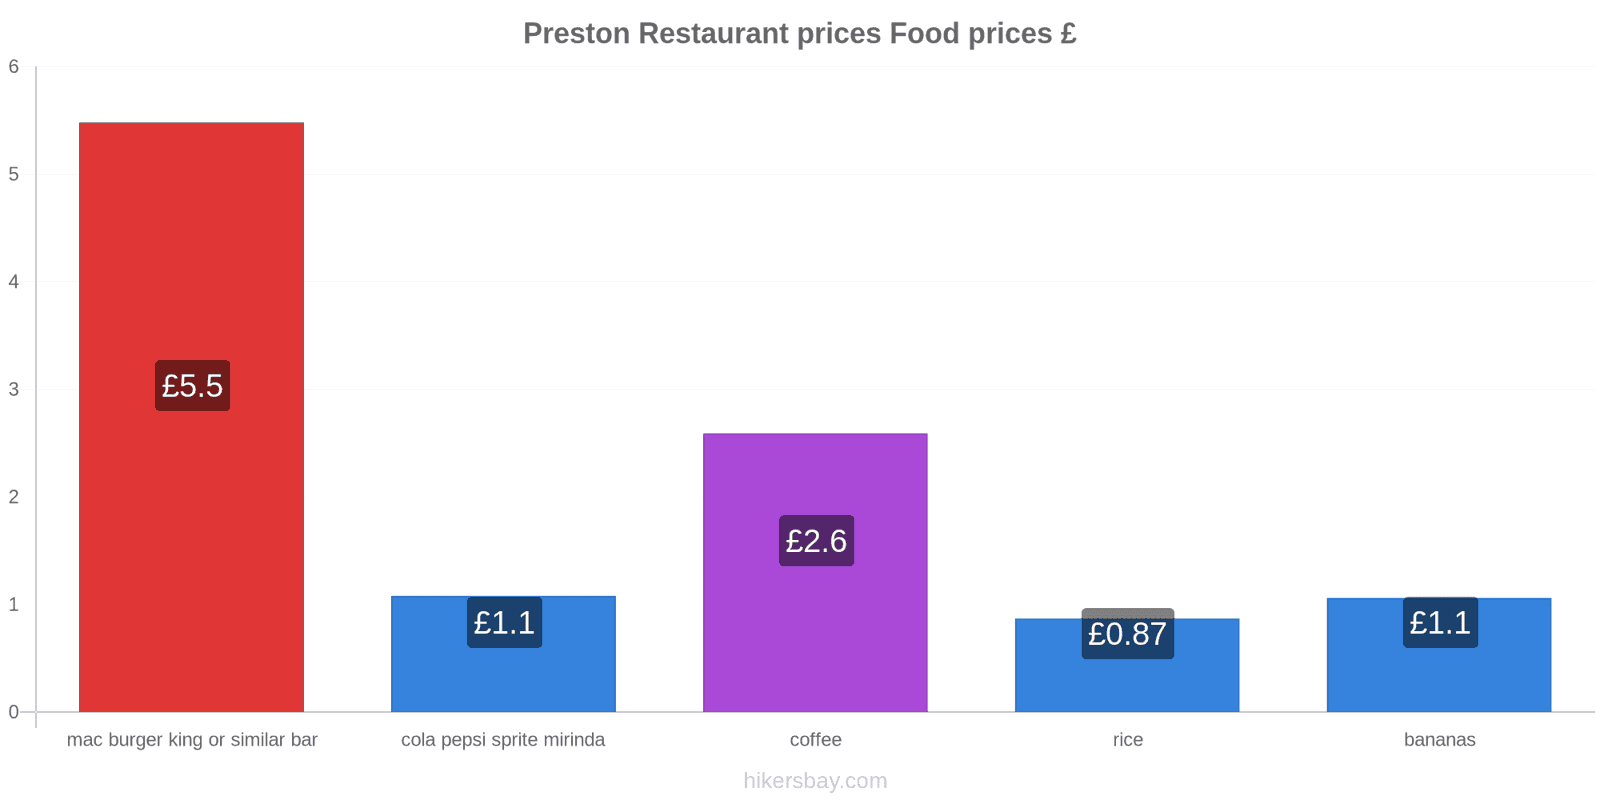 Preston price changes hikersbay.com